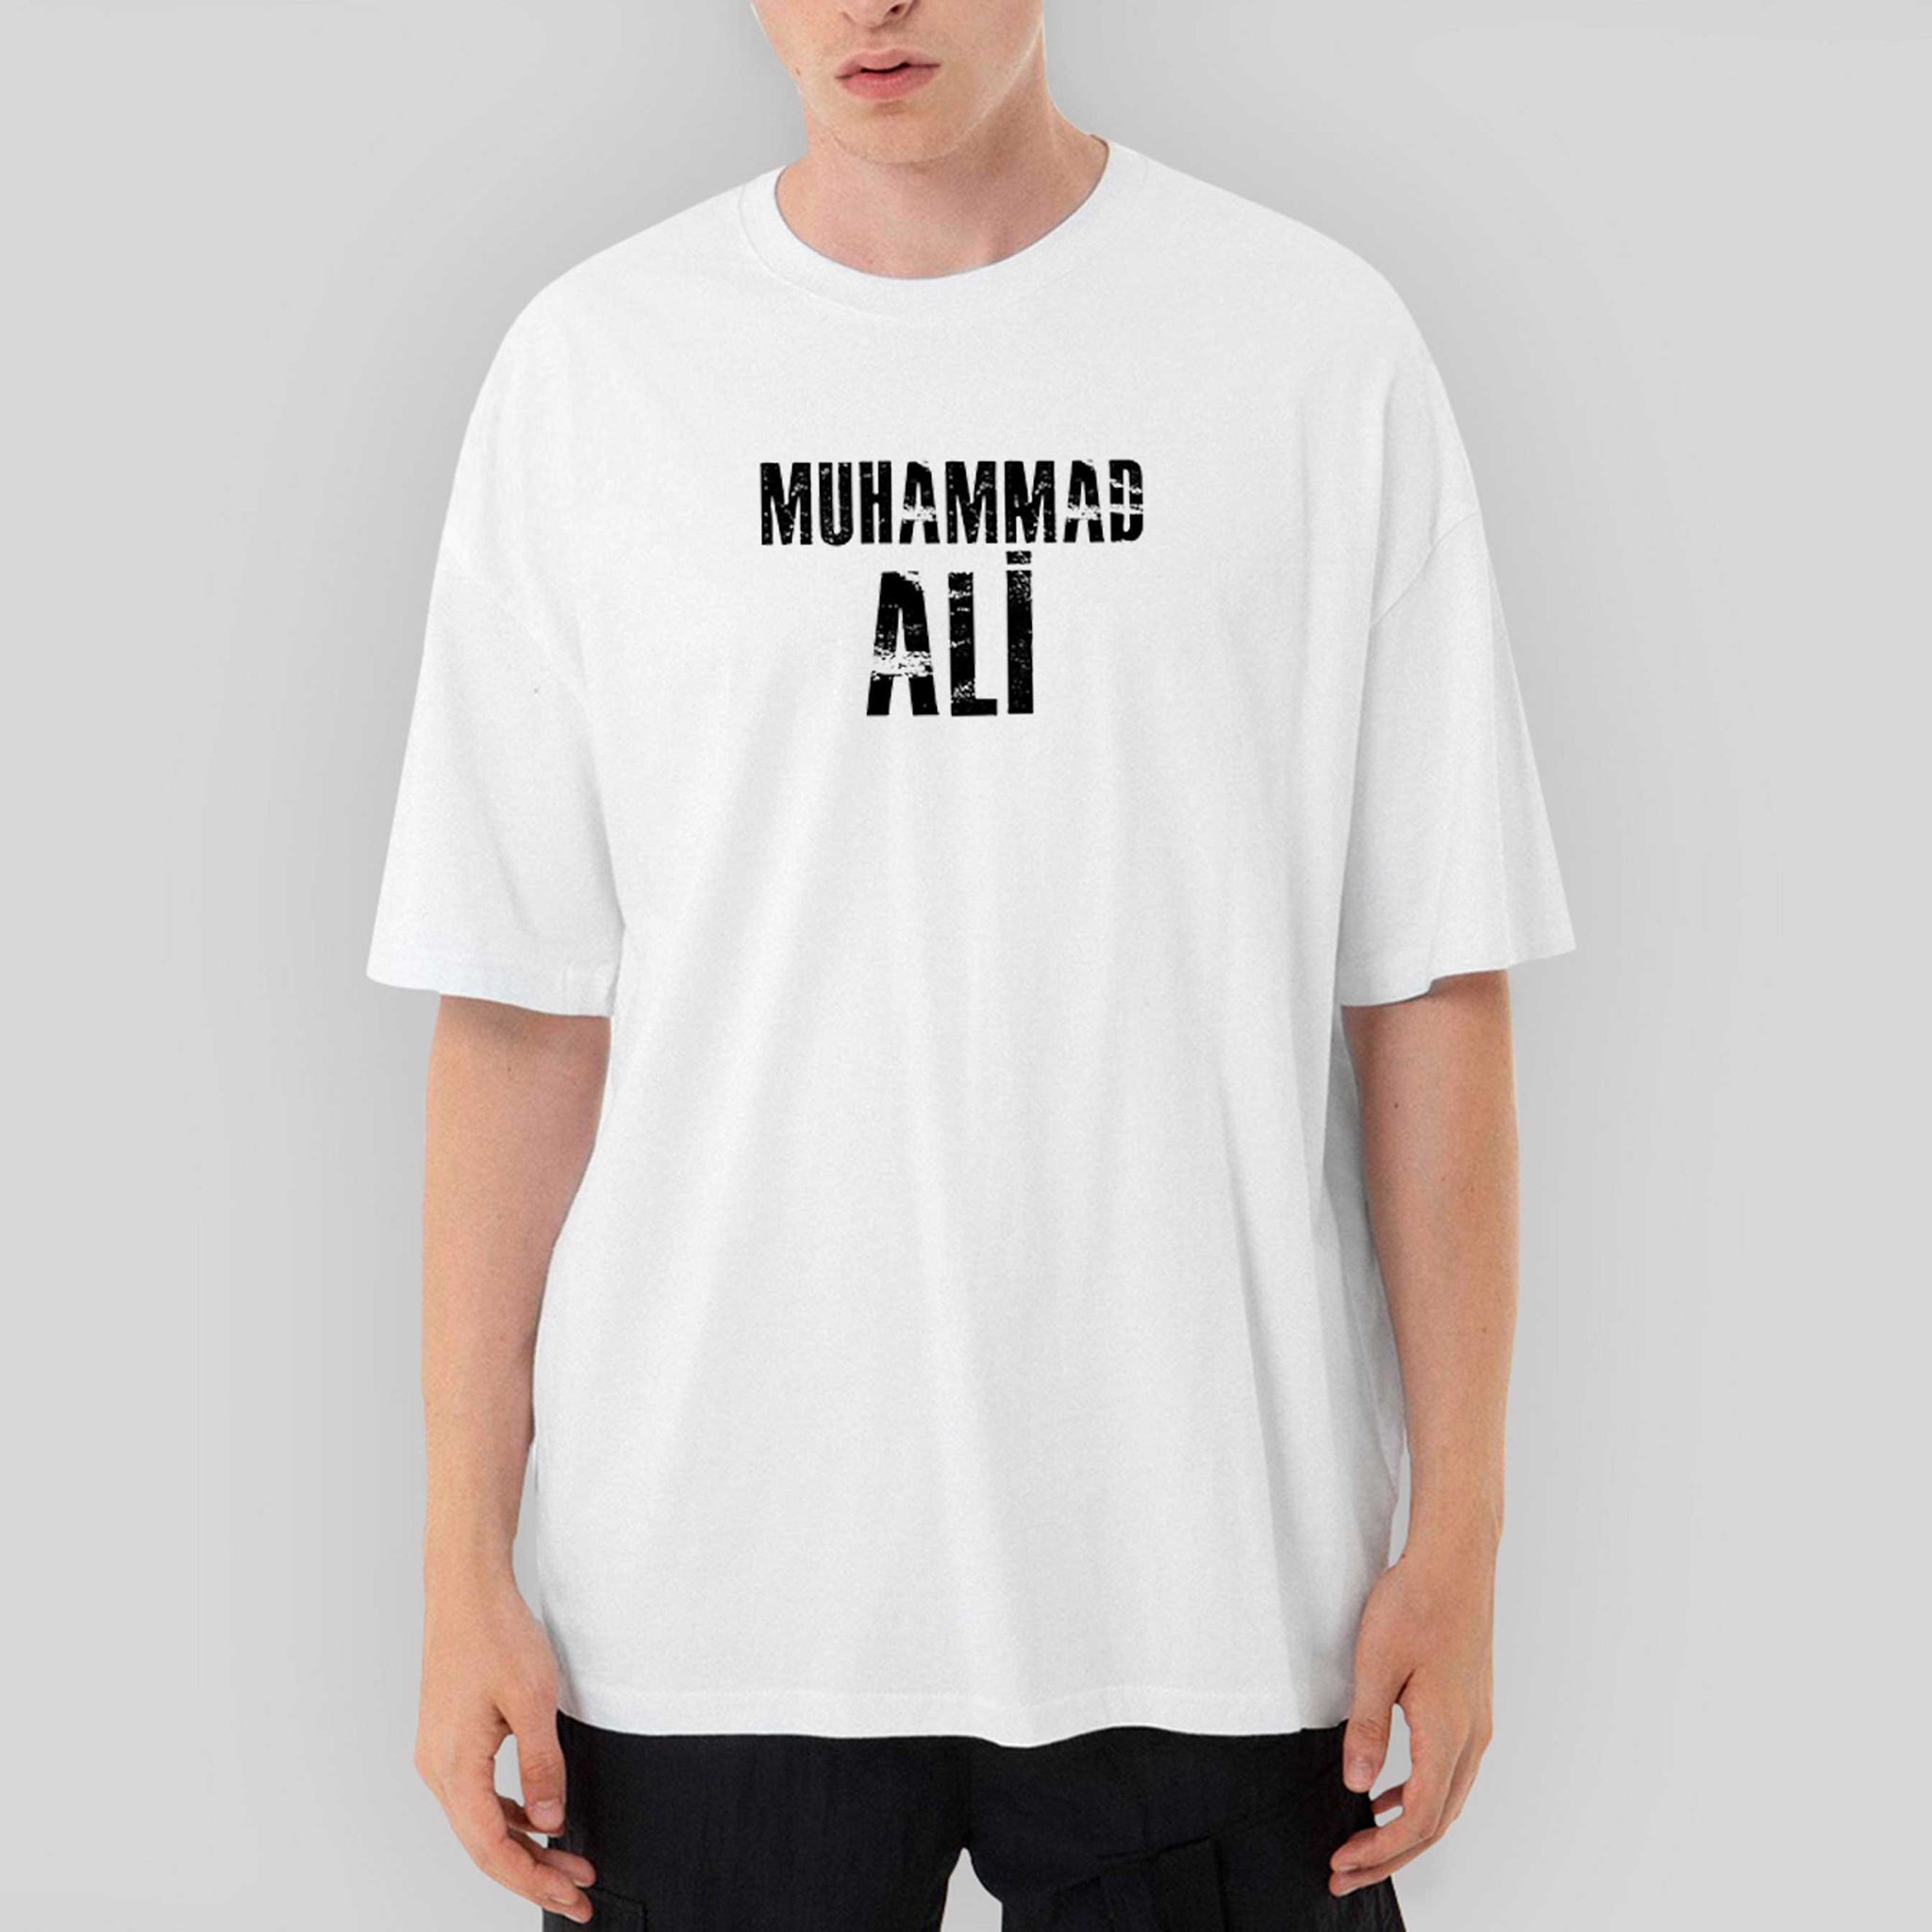 Muhammed Ali Black Text Oversize Beyaz Tişört